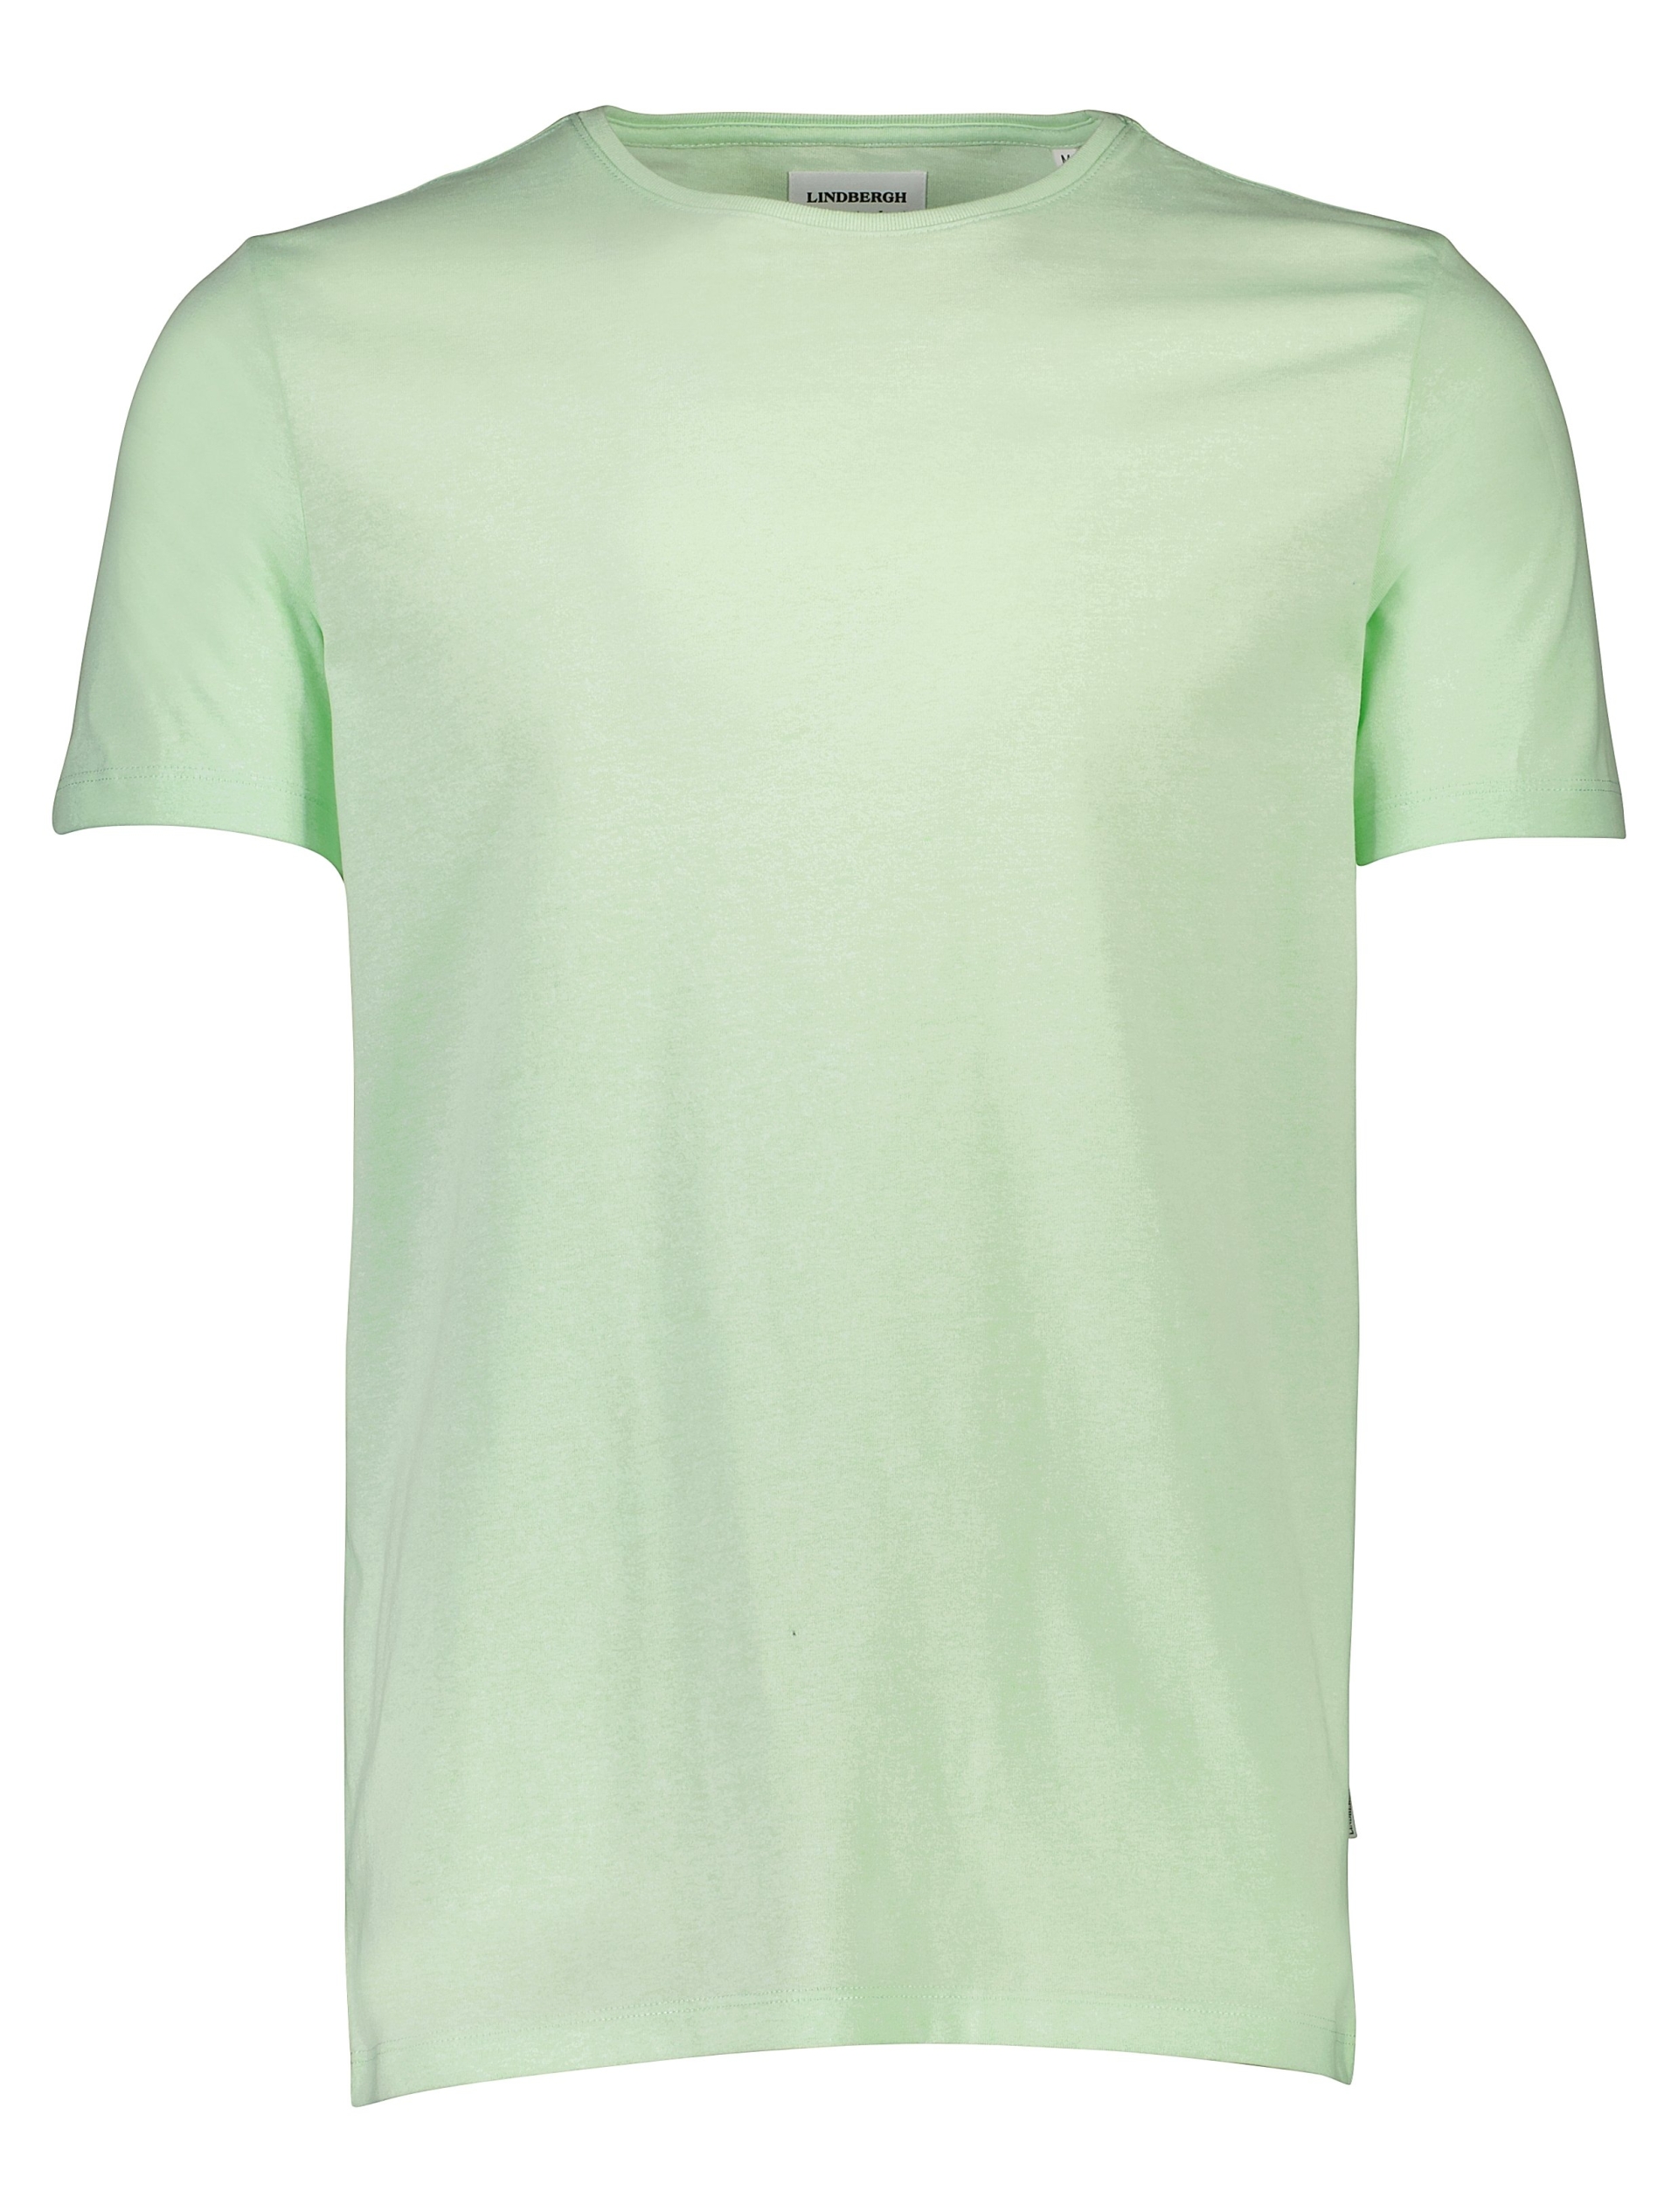 Lindbergh T-shirt grön / mint mix 224